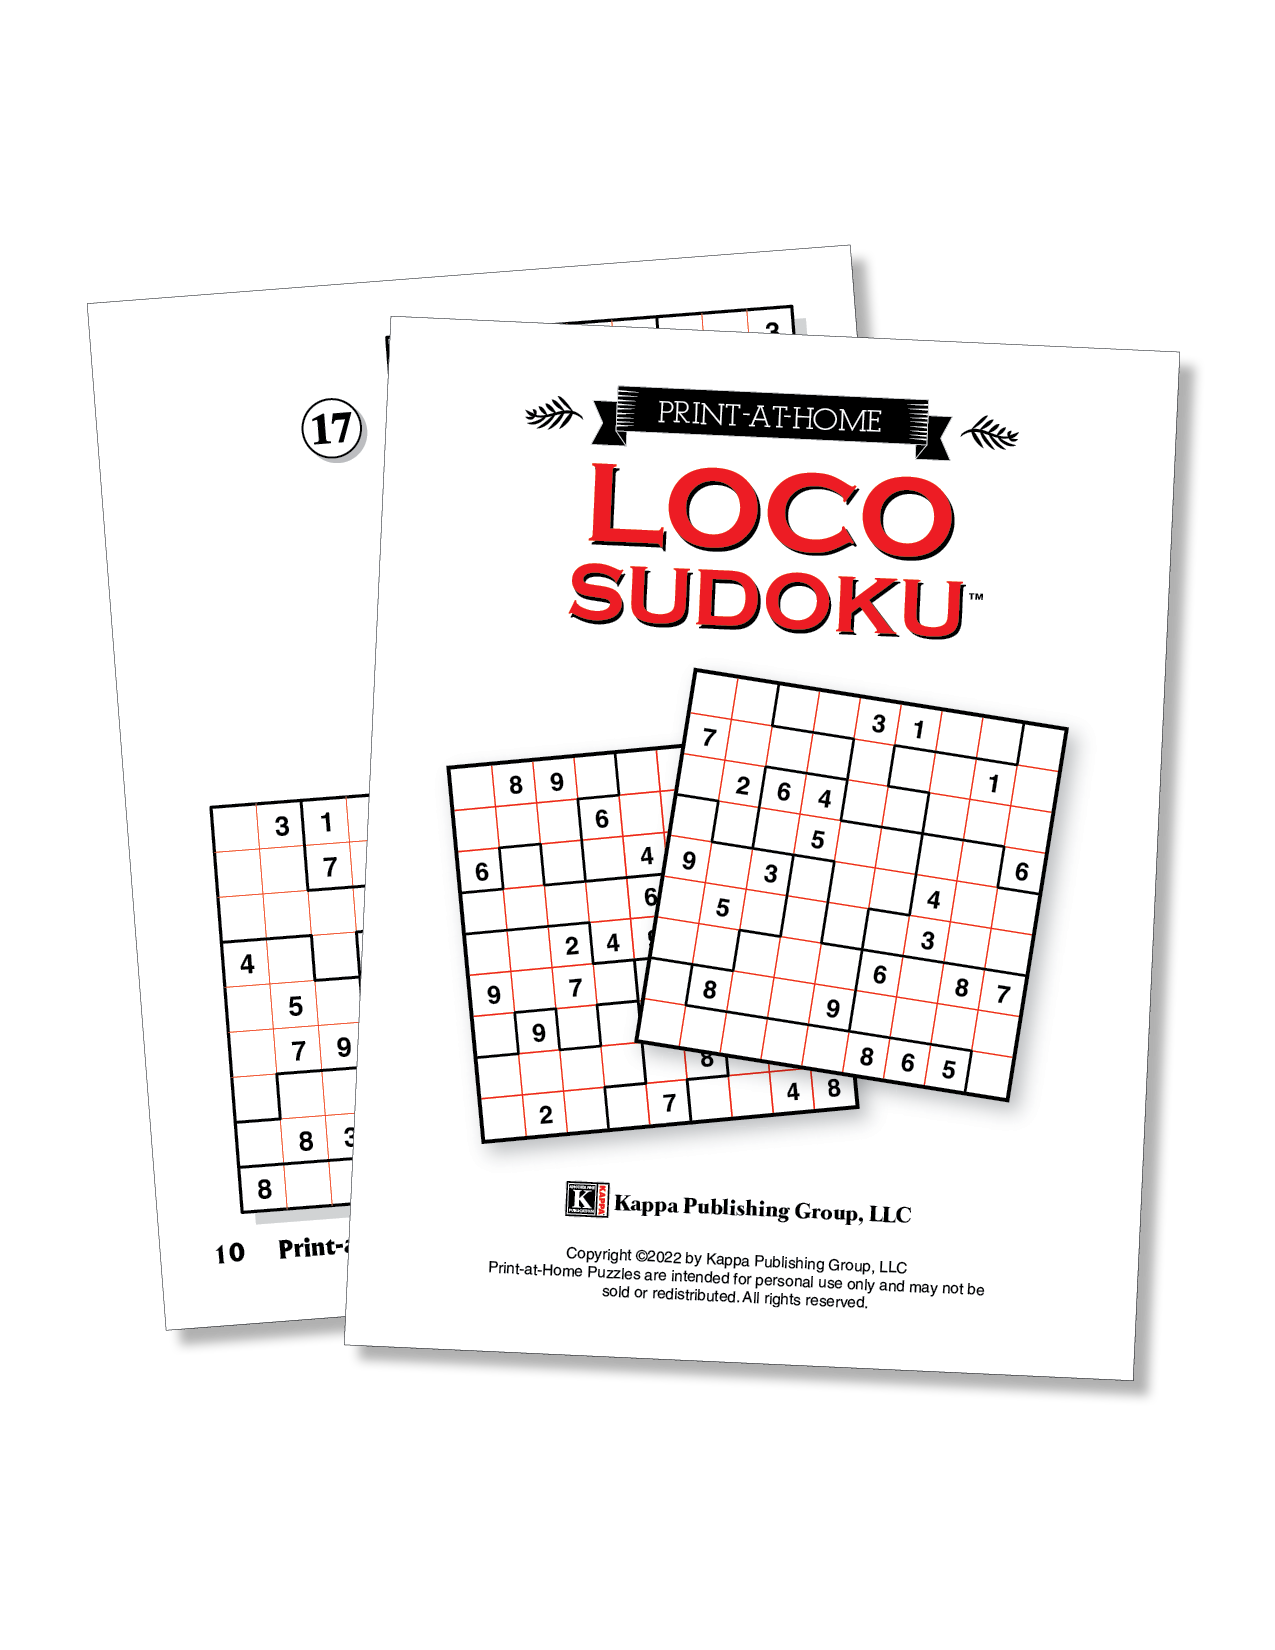 Sudoku 4,307 hard, Life and style